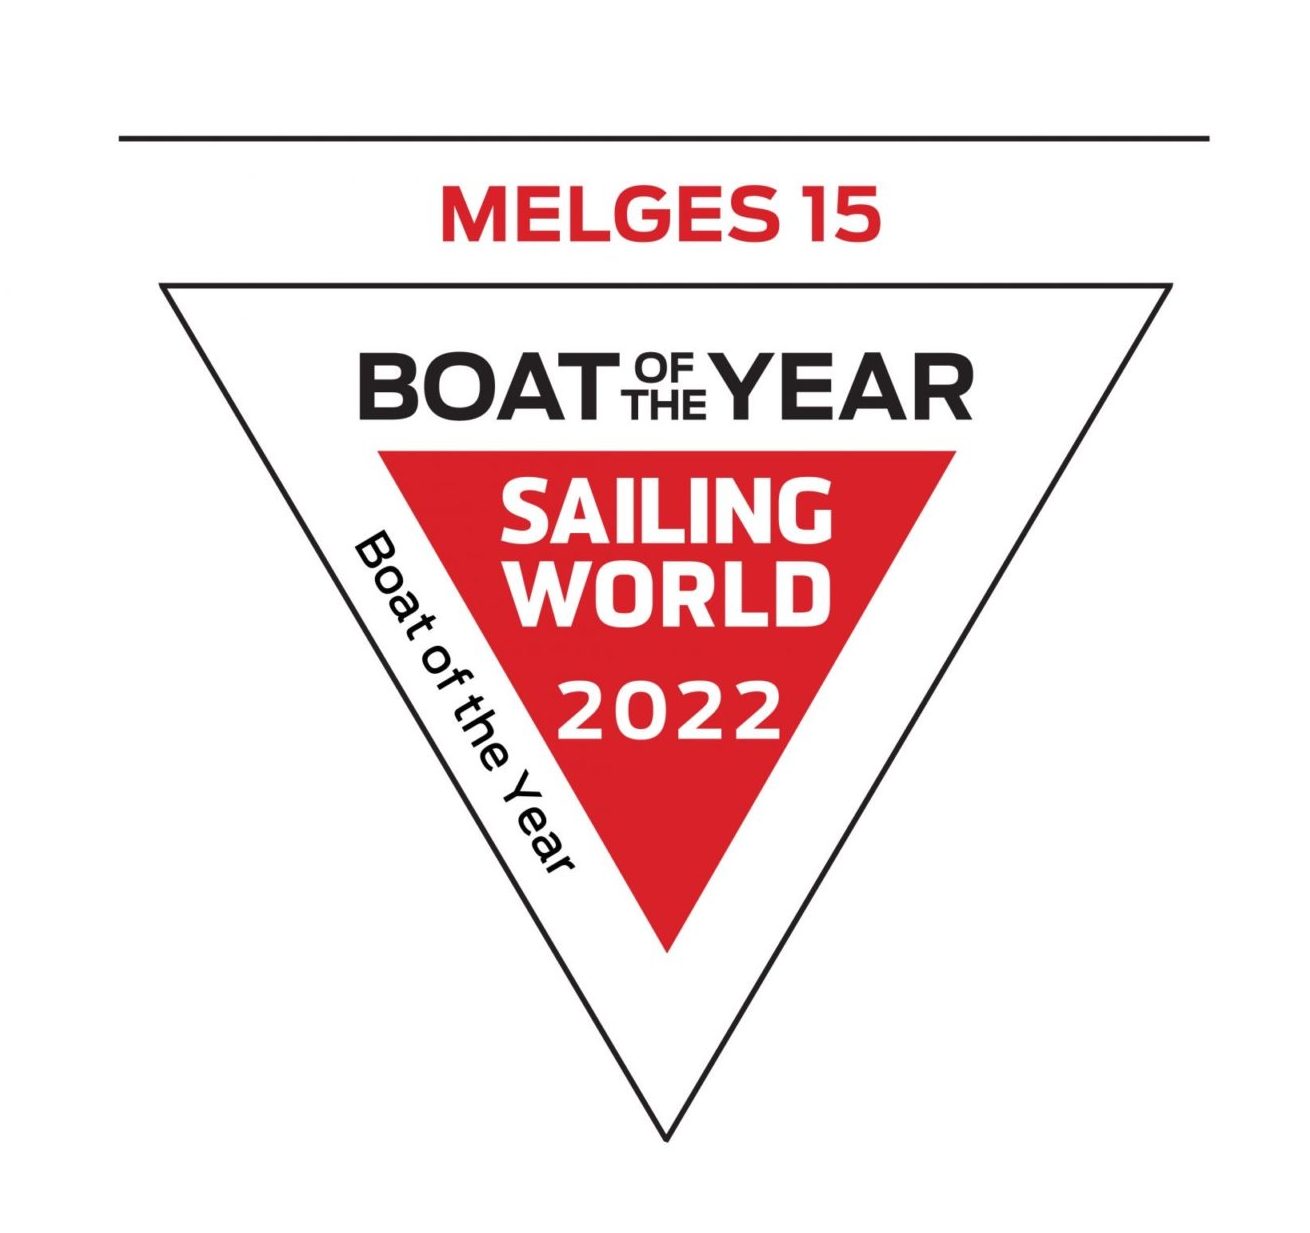 Melges 15 Boat of the Year 2022 Sailing World